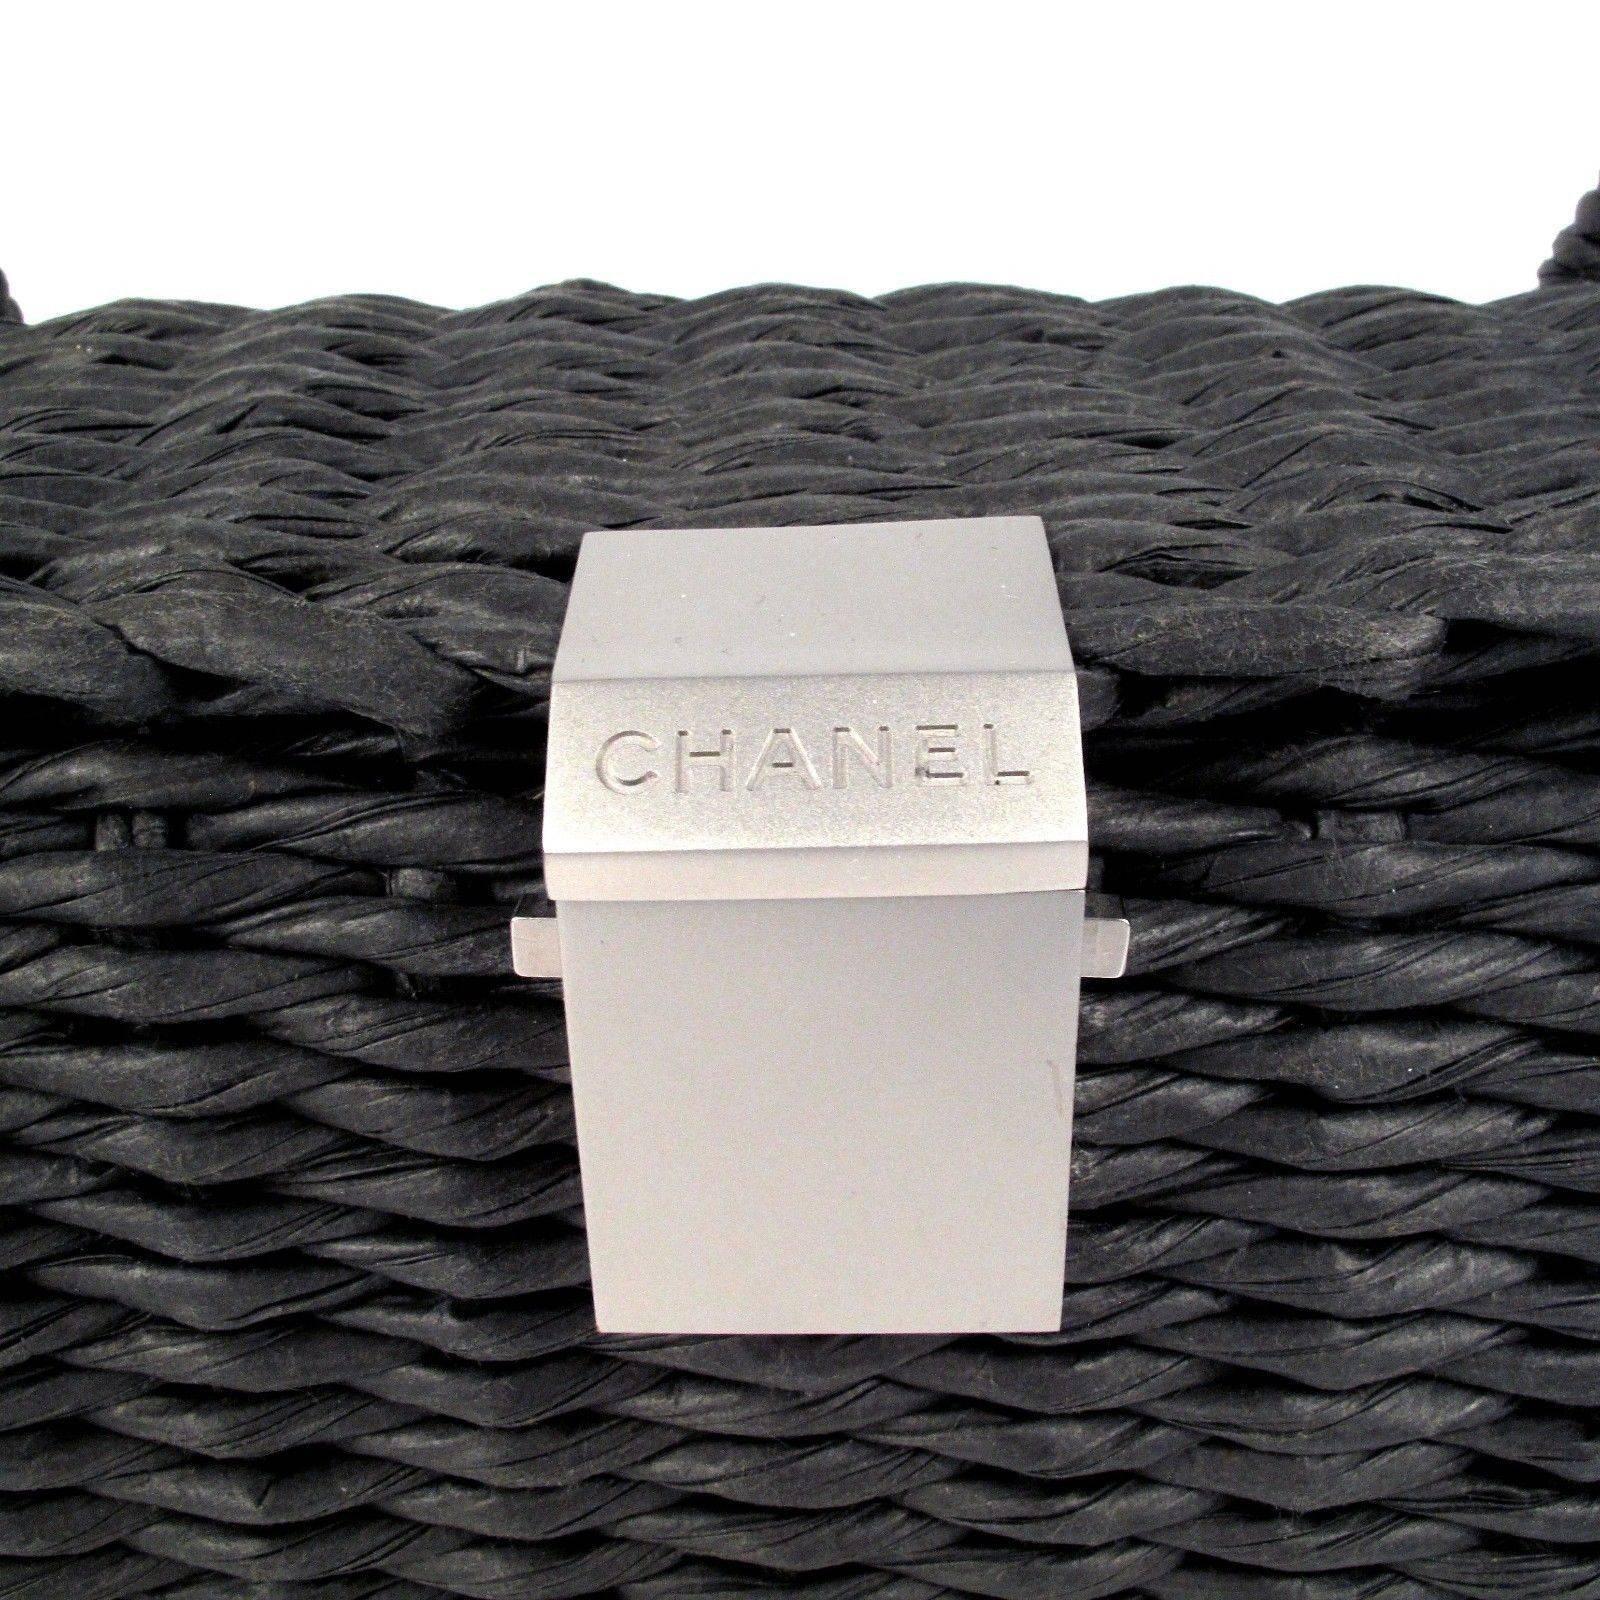 Chanel Straw Bag - Rare Basket Woven Raffia Tote Bag Gray Tan Black Leather CC 2